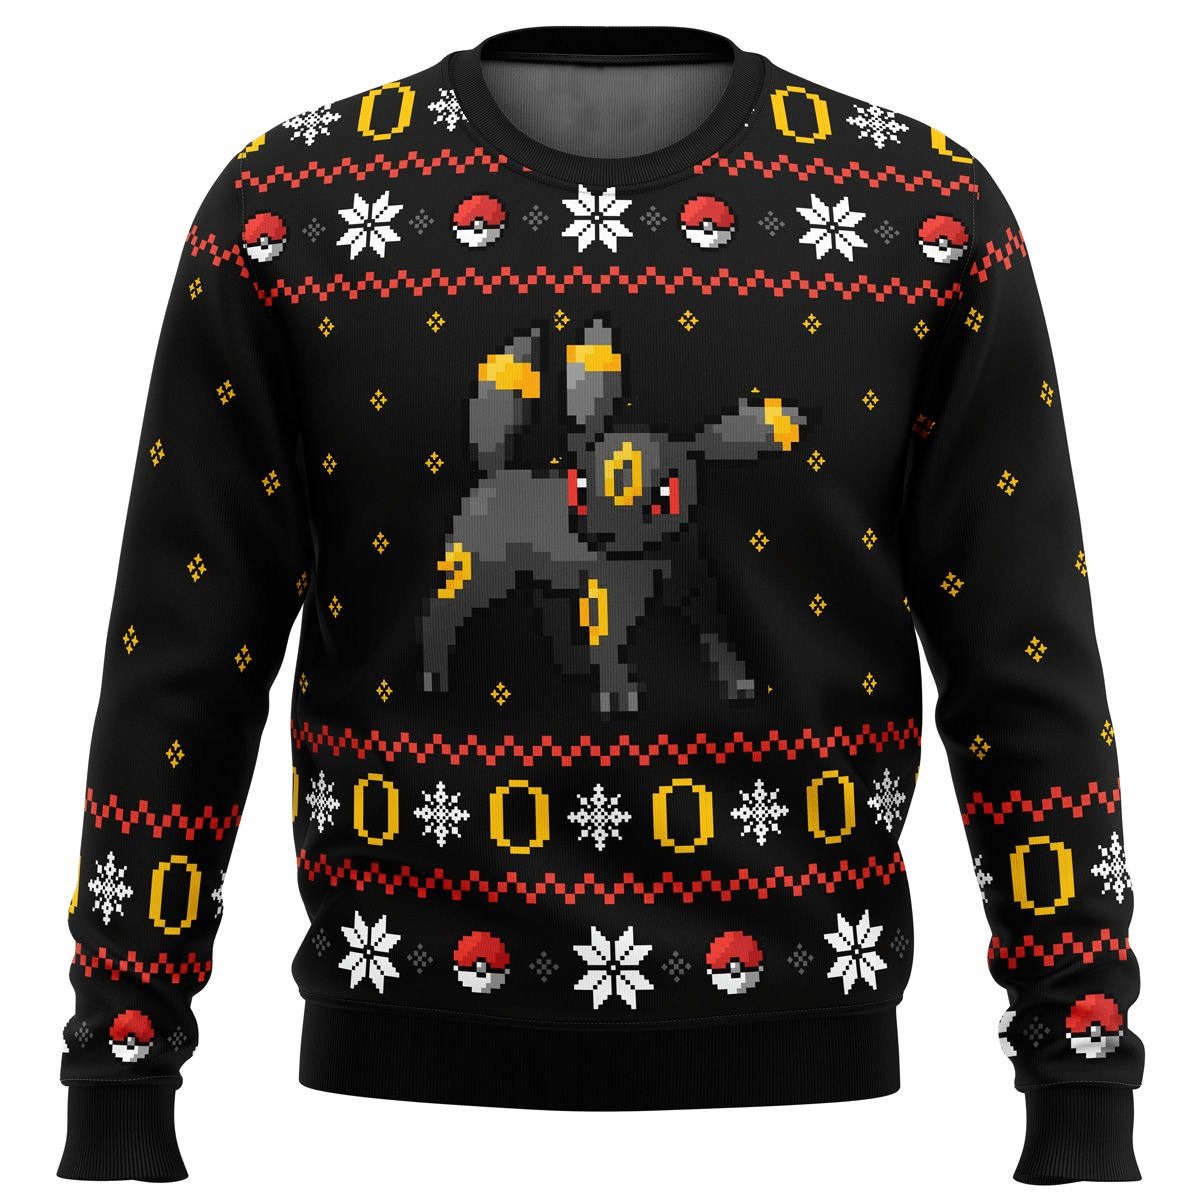 Anime Umbreon Black Pokemon Christmas Sweater